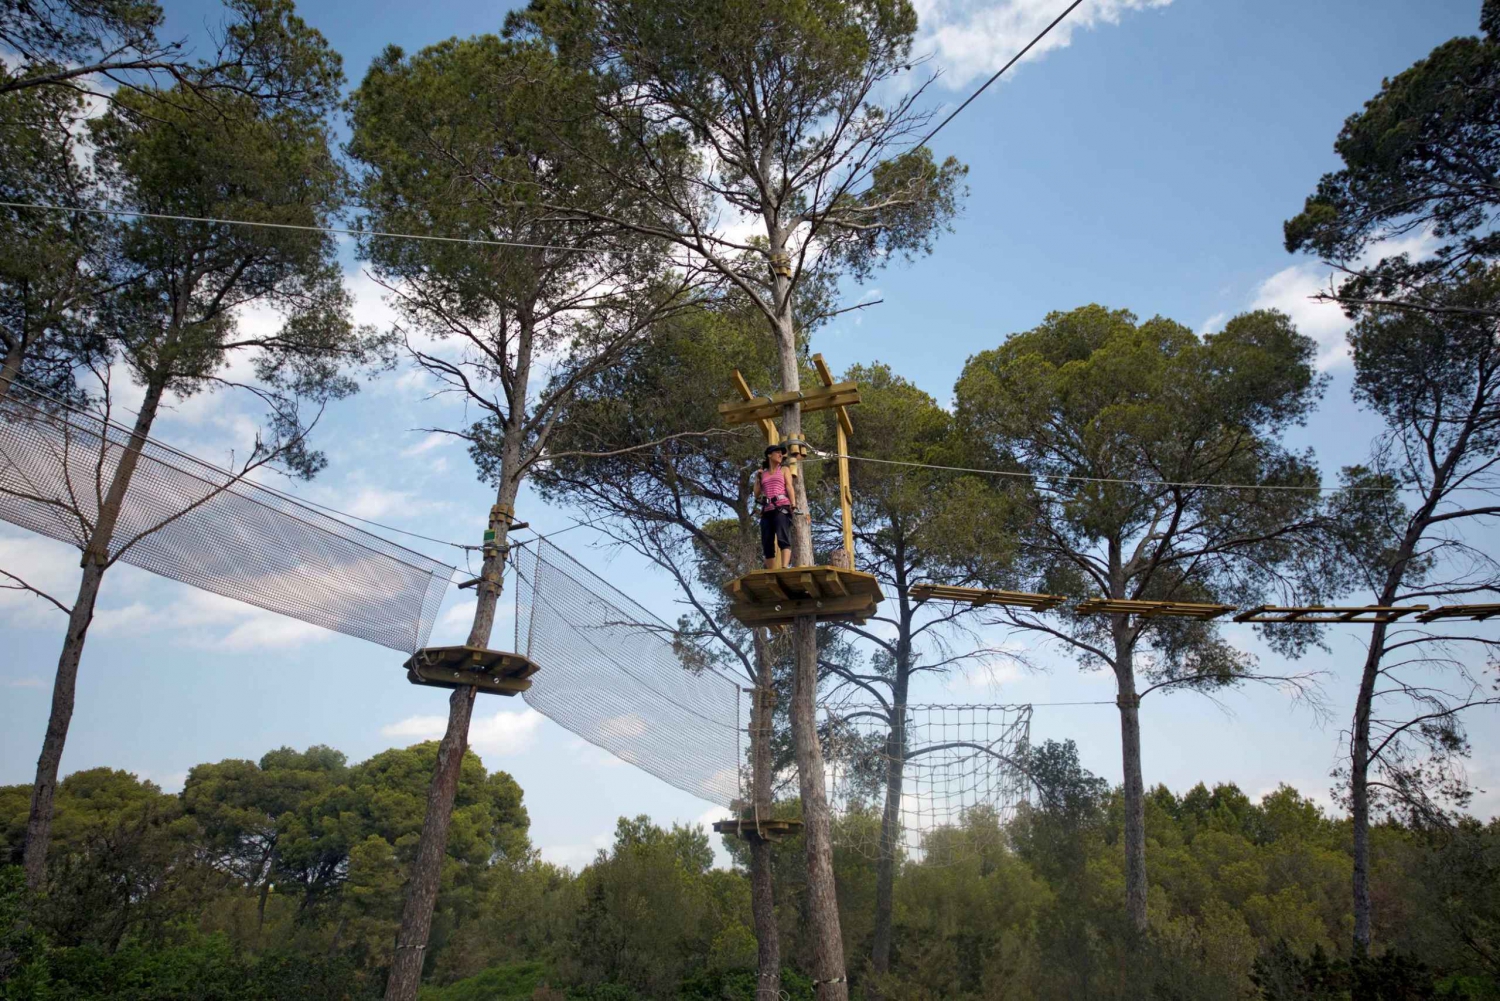 Mallorca: Forestal Park Family or Sport Course Adventure